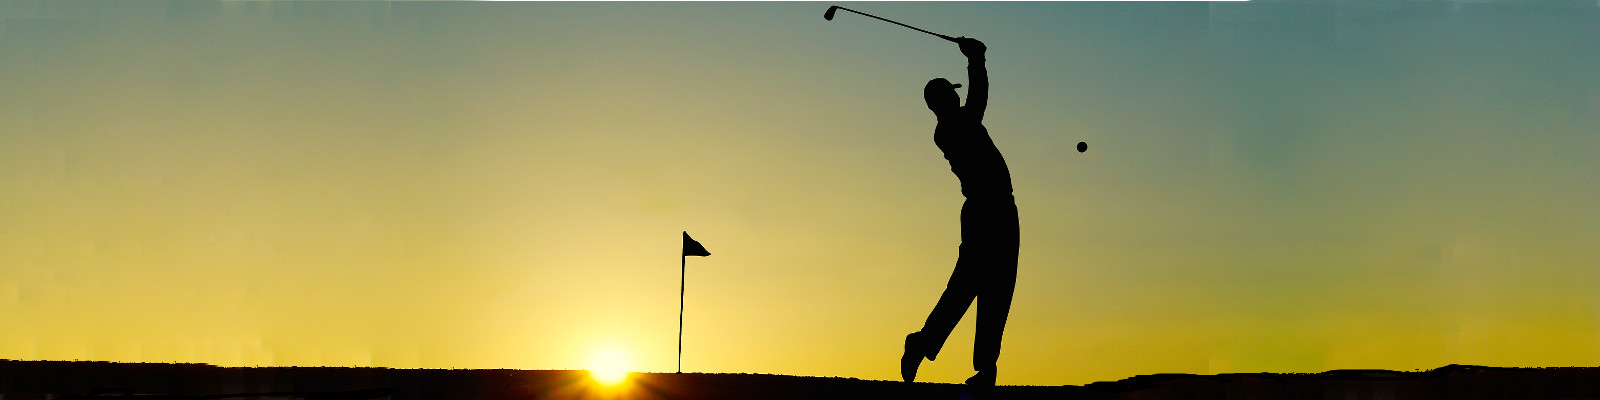 Golf Article Slideshow